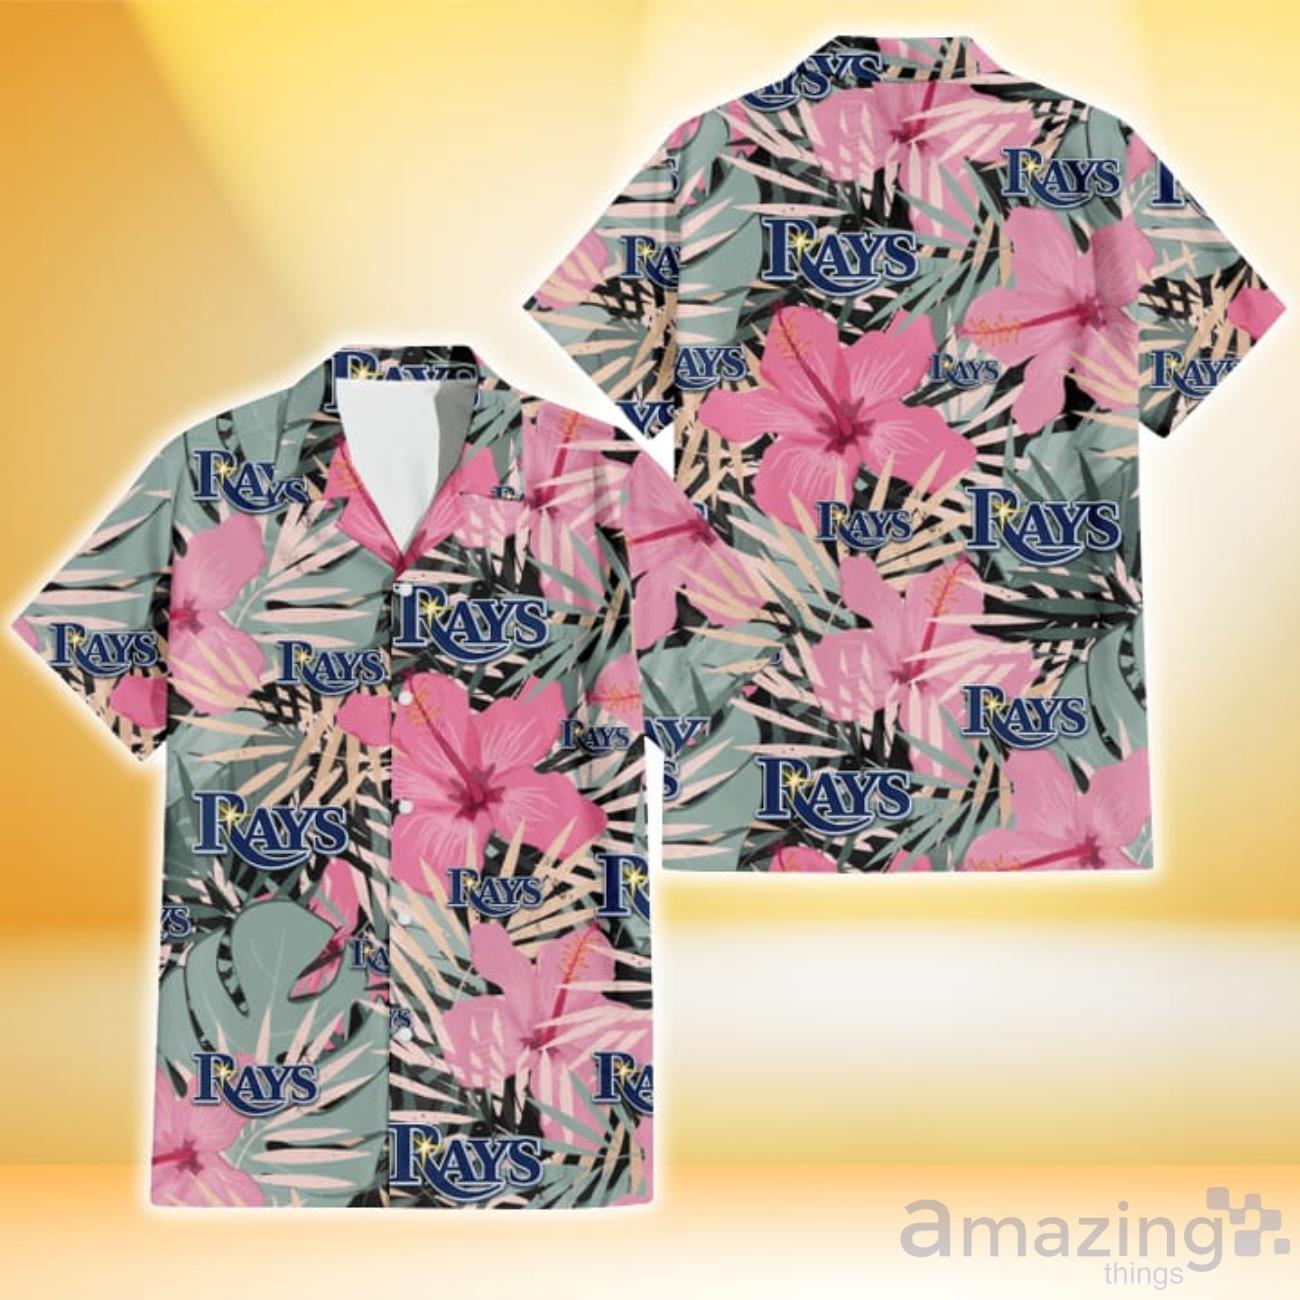 pink tampa bay rays shirt